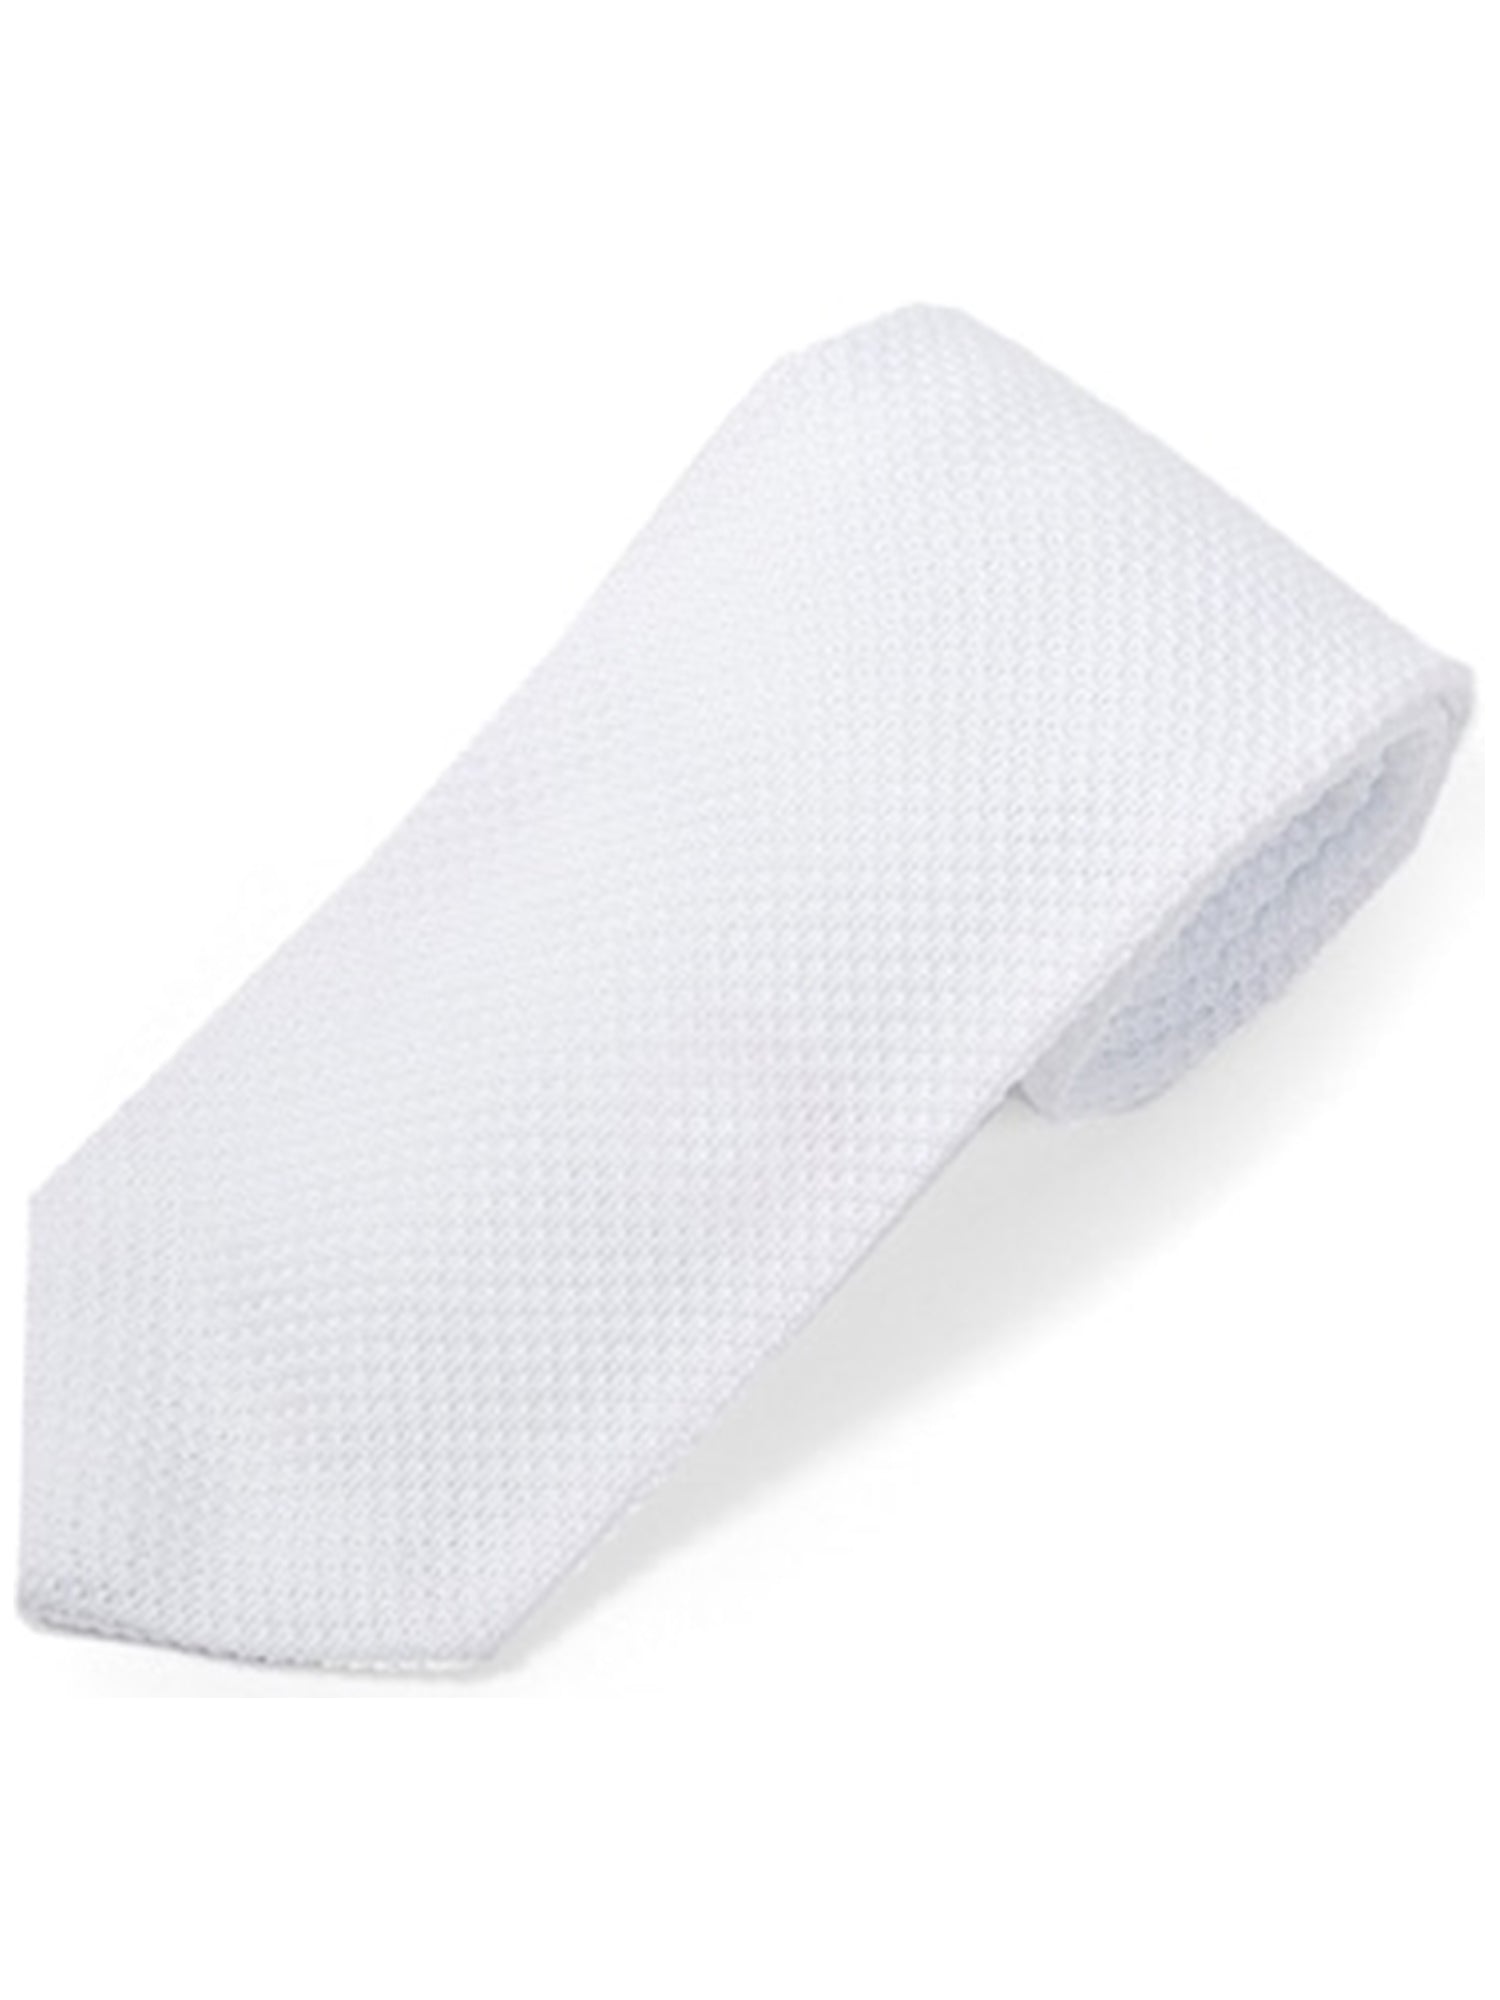 Men's Solid 3.0" Poly Knit Neck Tie Neck Tie TheDapperTie White Regular 